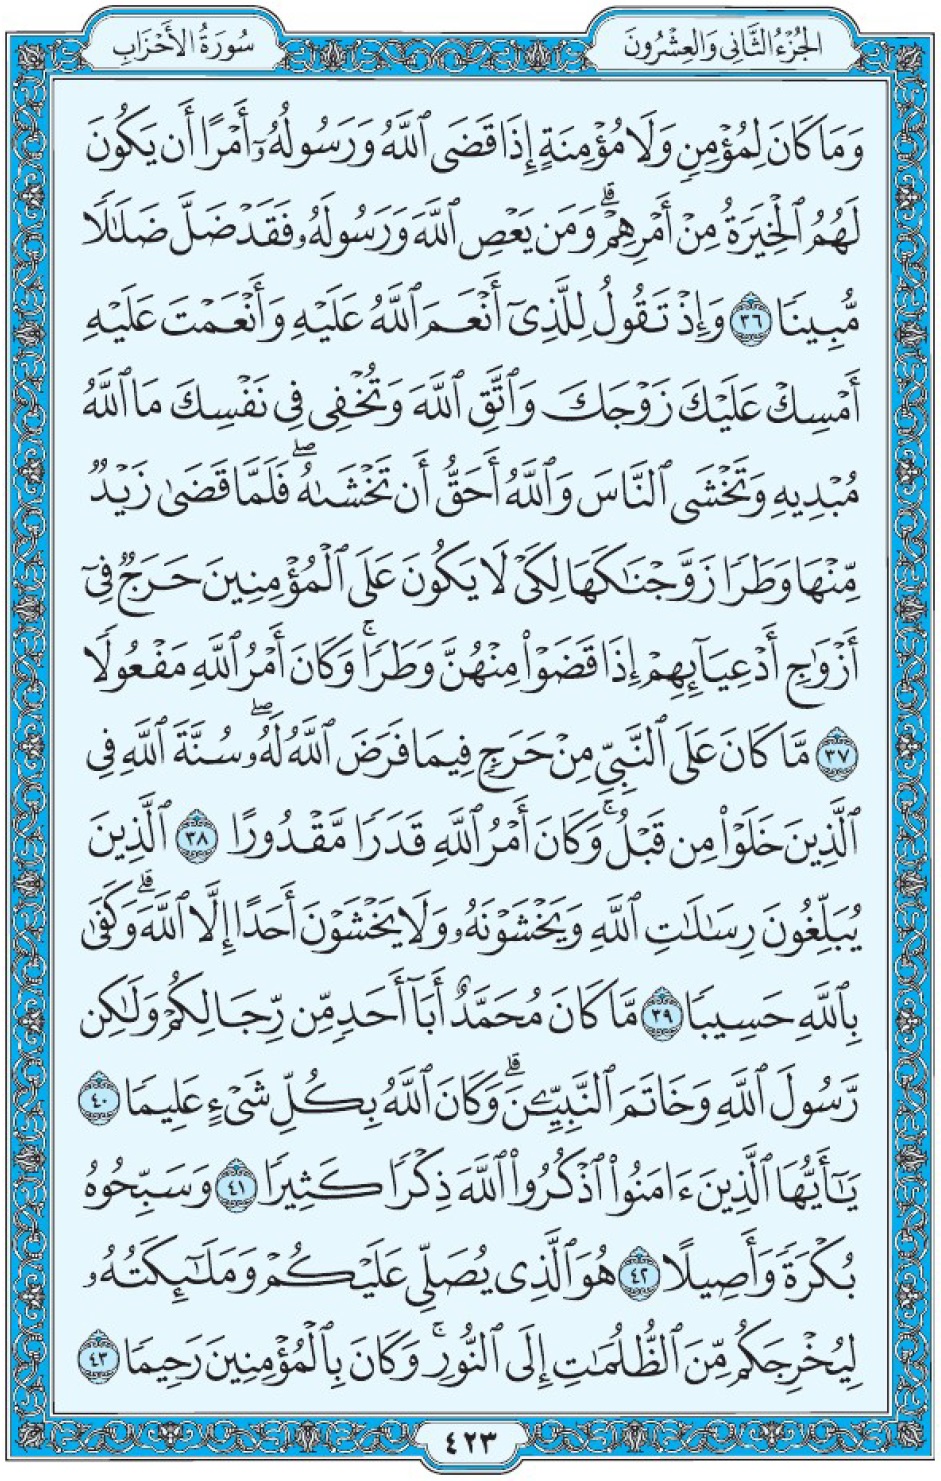 Коран Мединский мусхаф страница 423, Аль-Ахзаб, аят 36-43